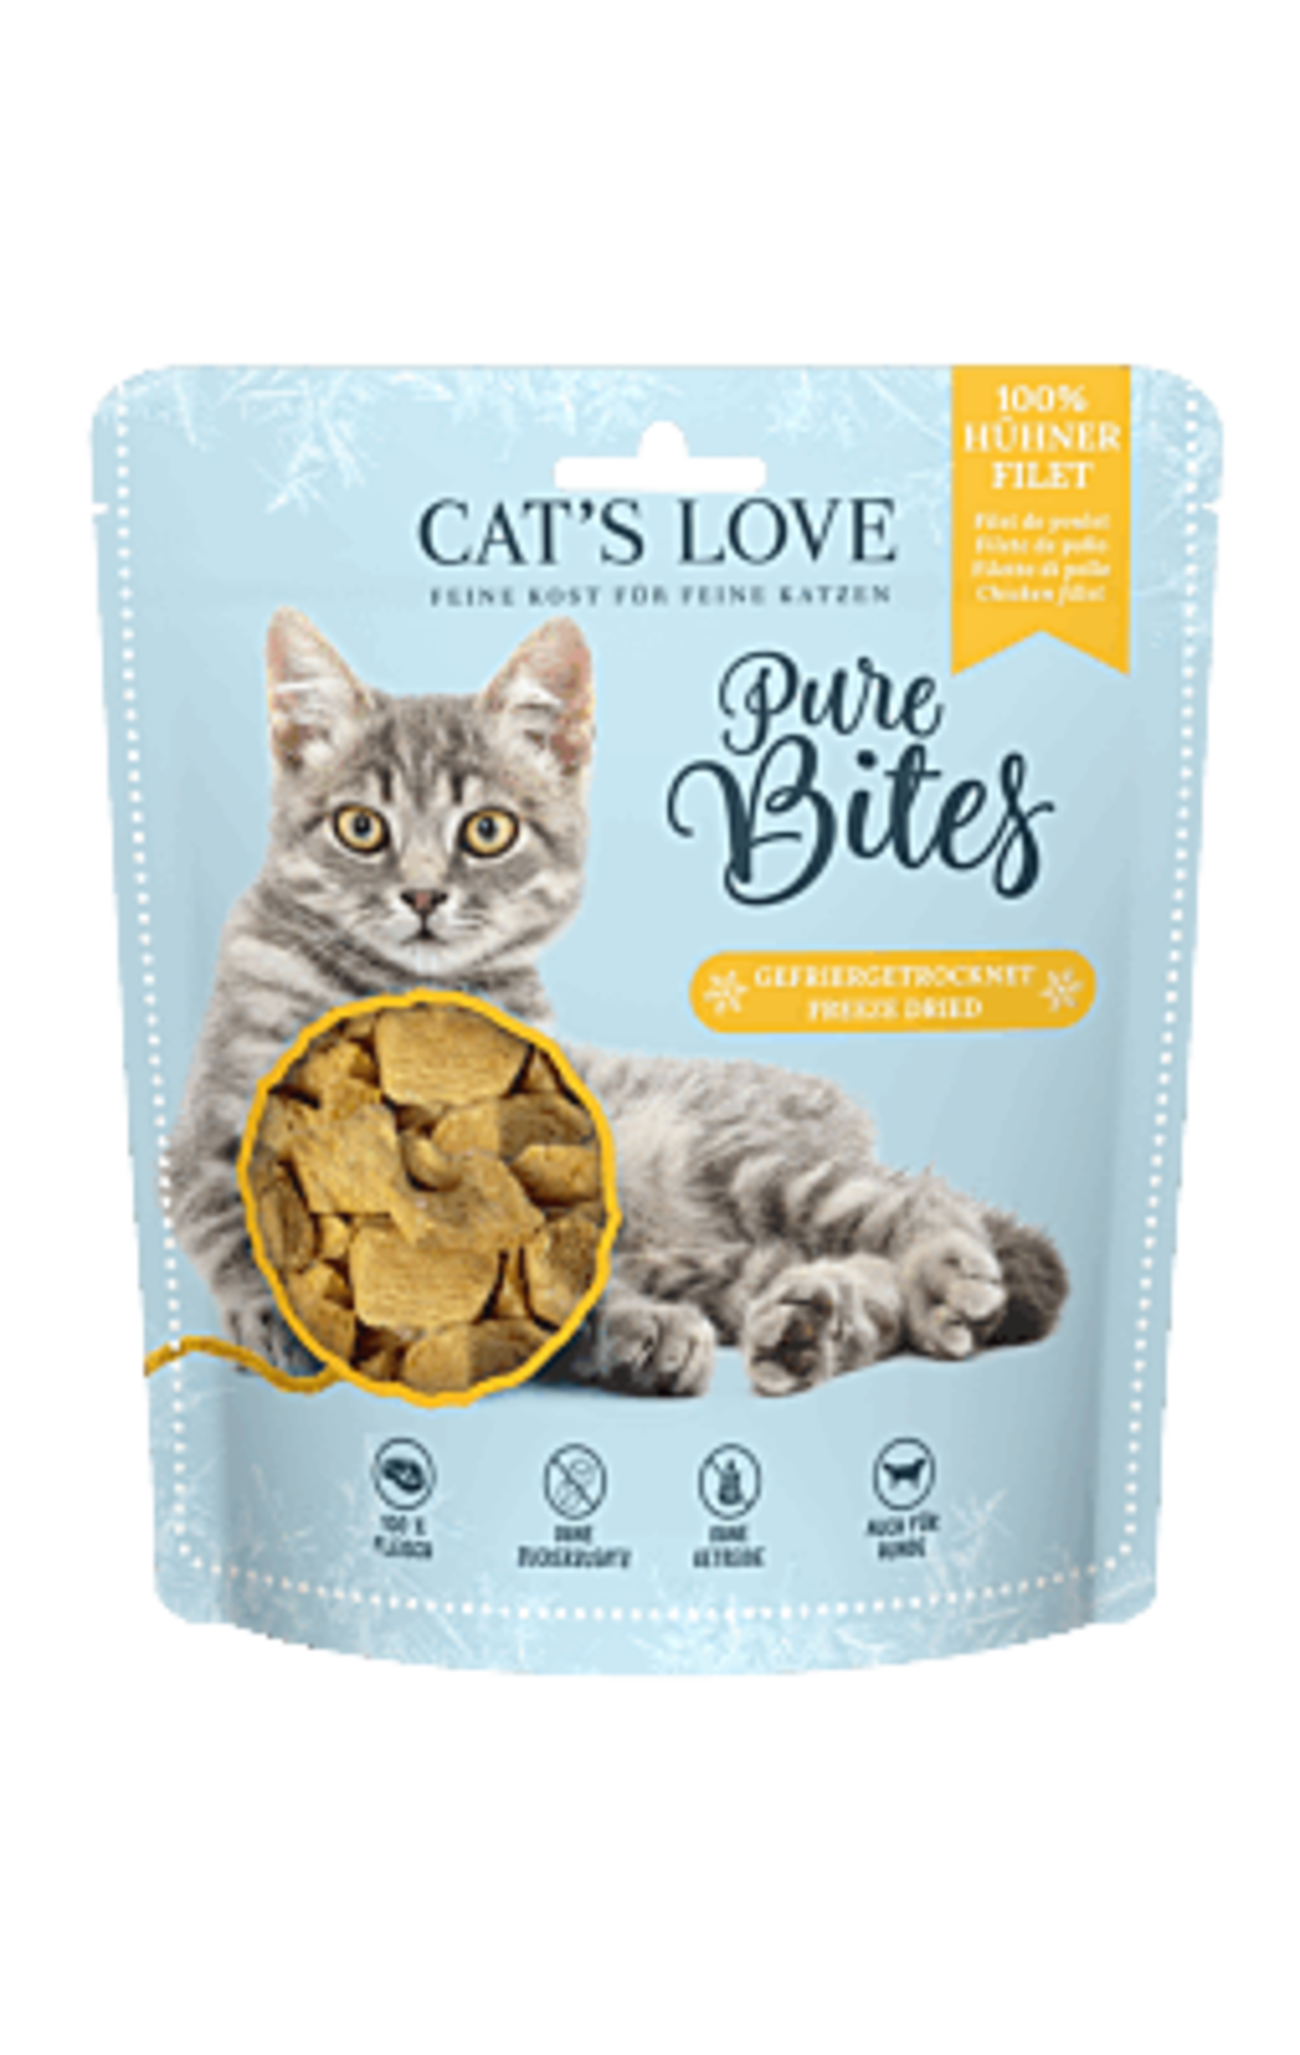 CAT'S LOVE | Pure Bites chicken fillet